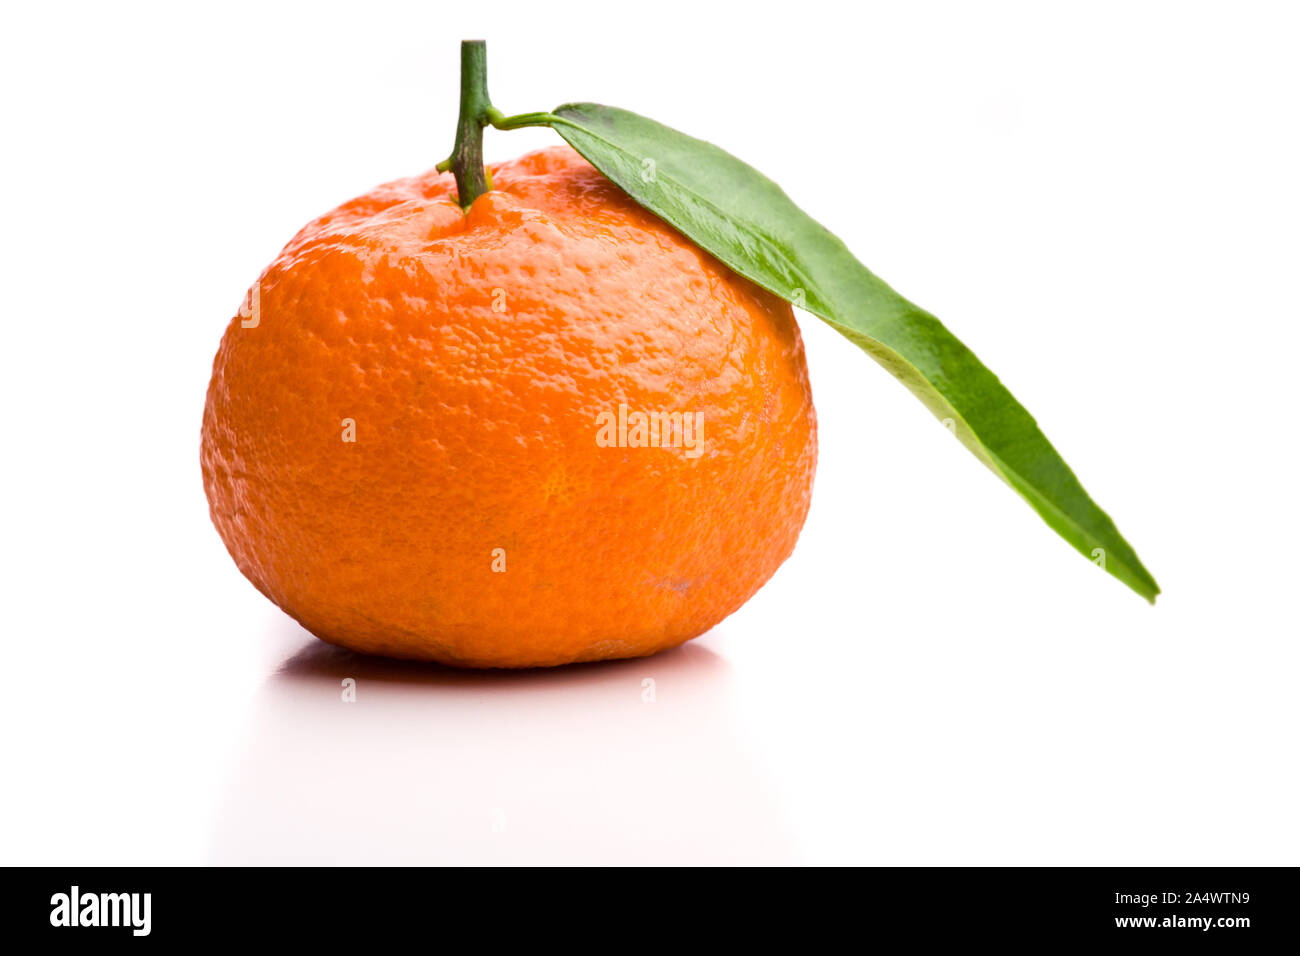 Single whole mandarin with stalk and leaf Stock Photo